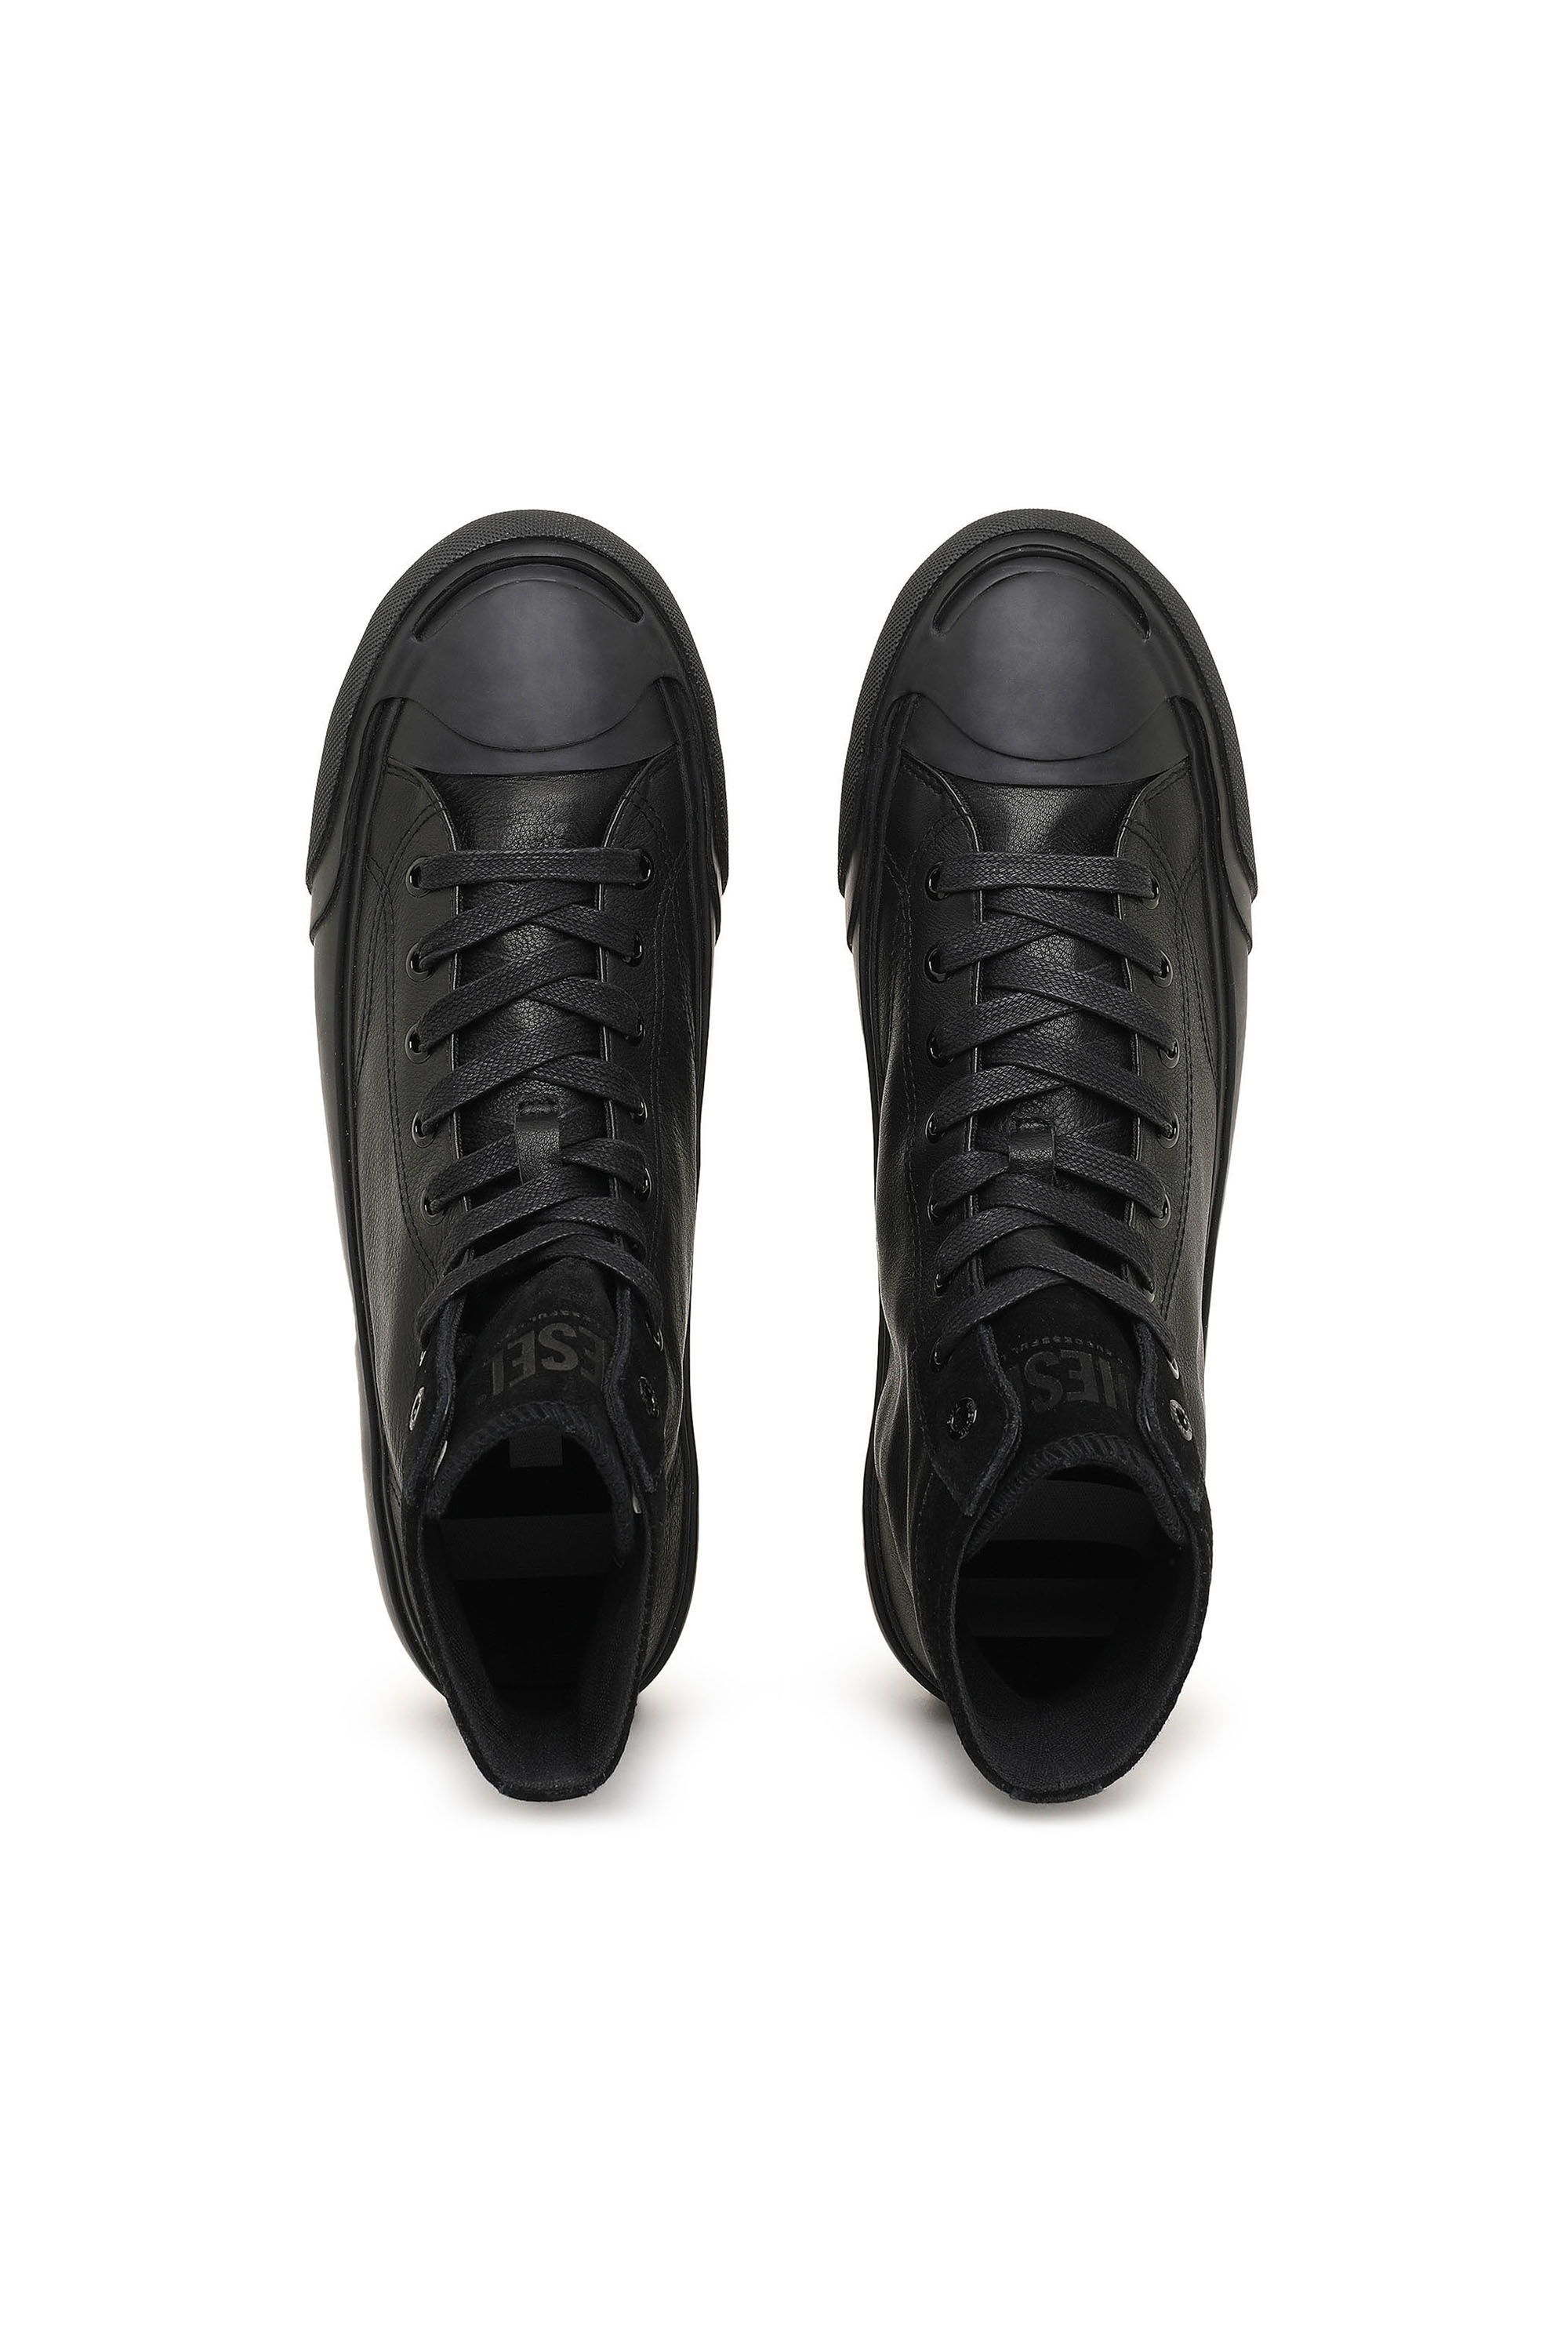 S-PRINCIPIA MID X Unisex: High-top sneakers in leather | Diesel